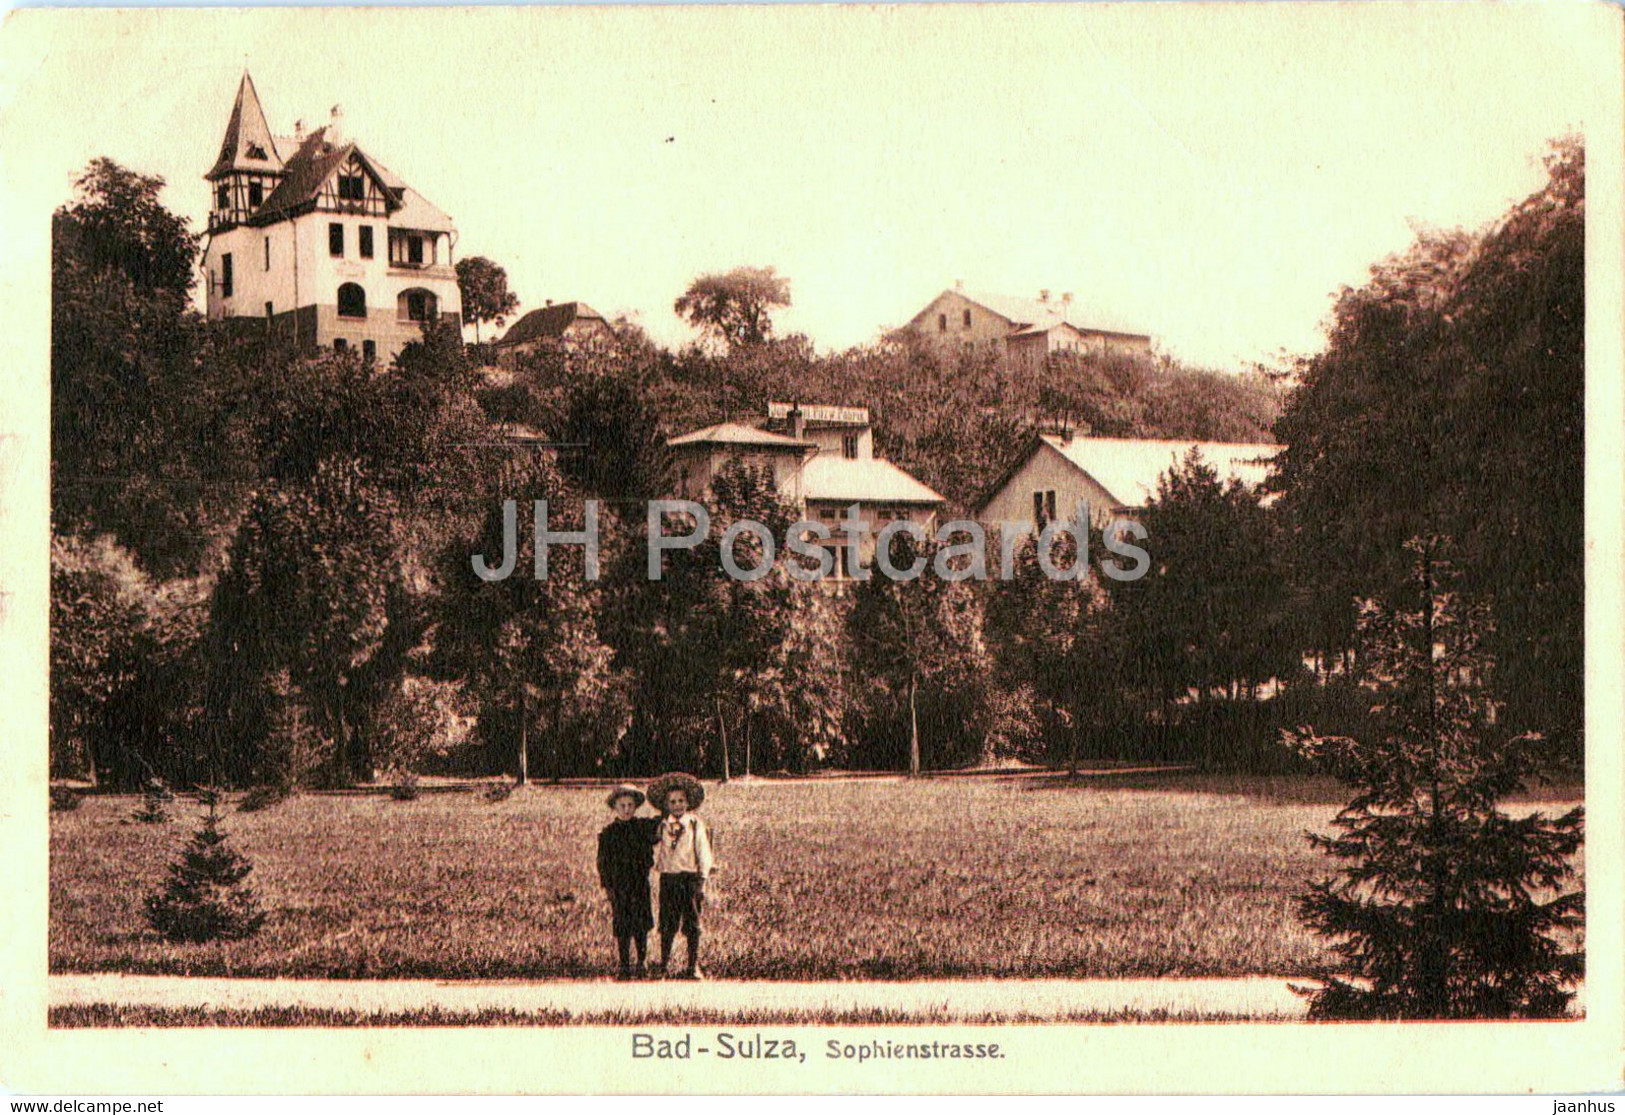 Bad Sulza - Sophienstrasse - Old Postcard - 1912 - Germany - Used - Bad Sulza